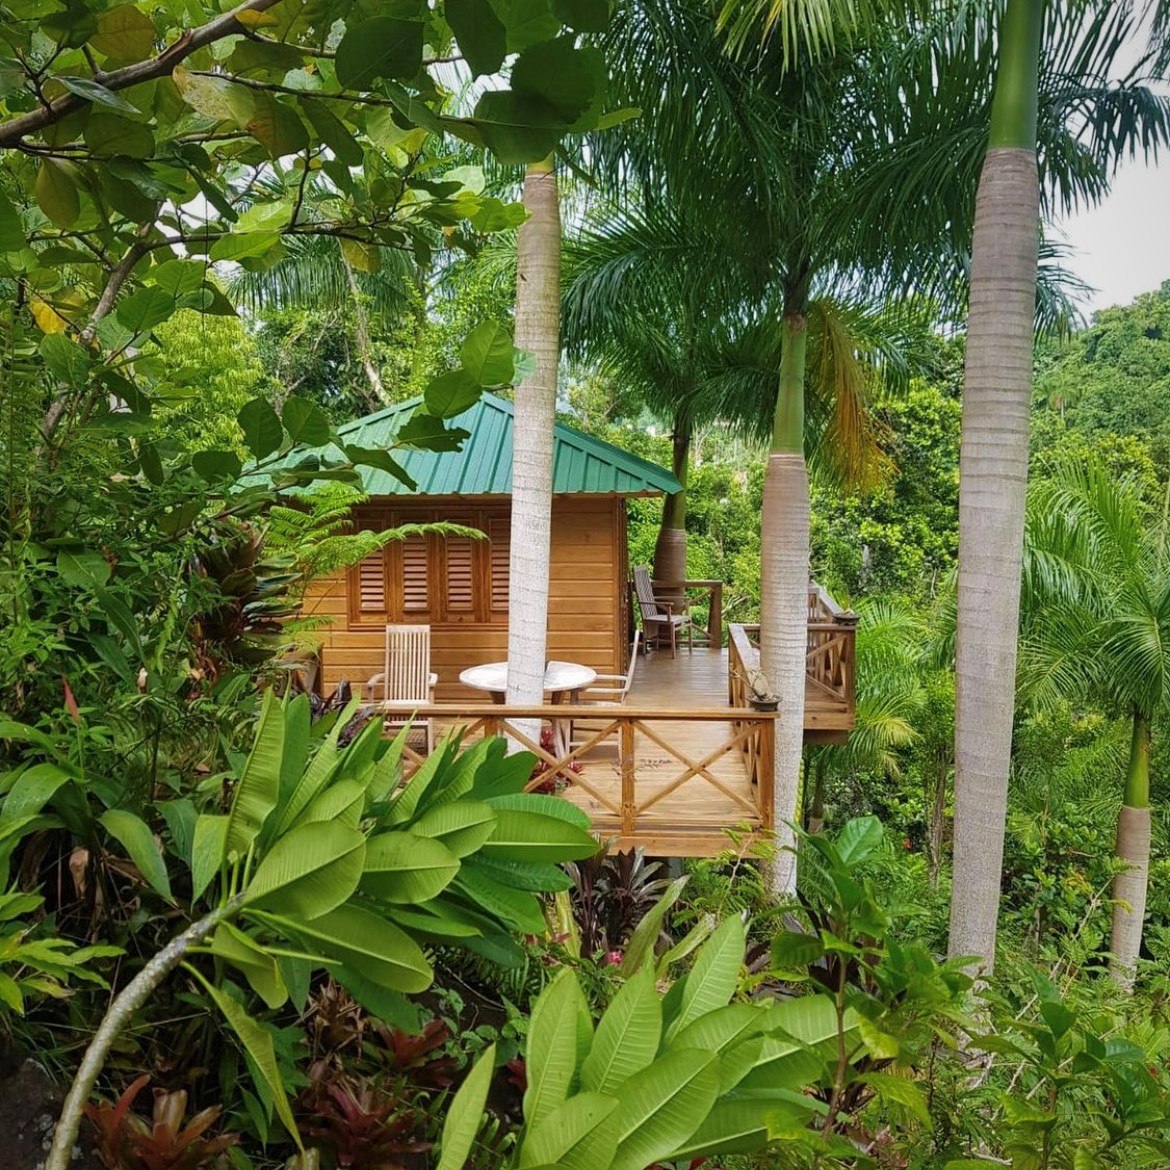 Yuquiyú Treehouses - Puerto Rico